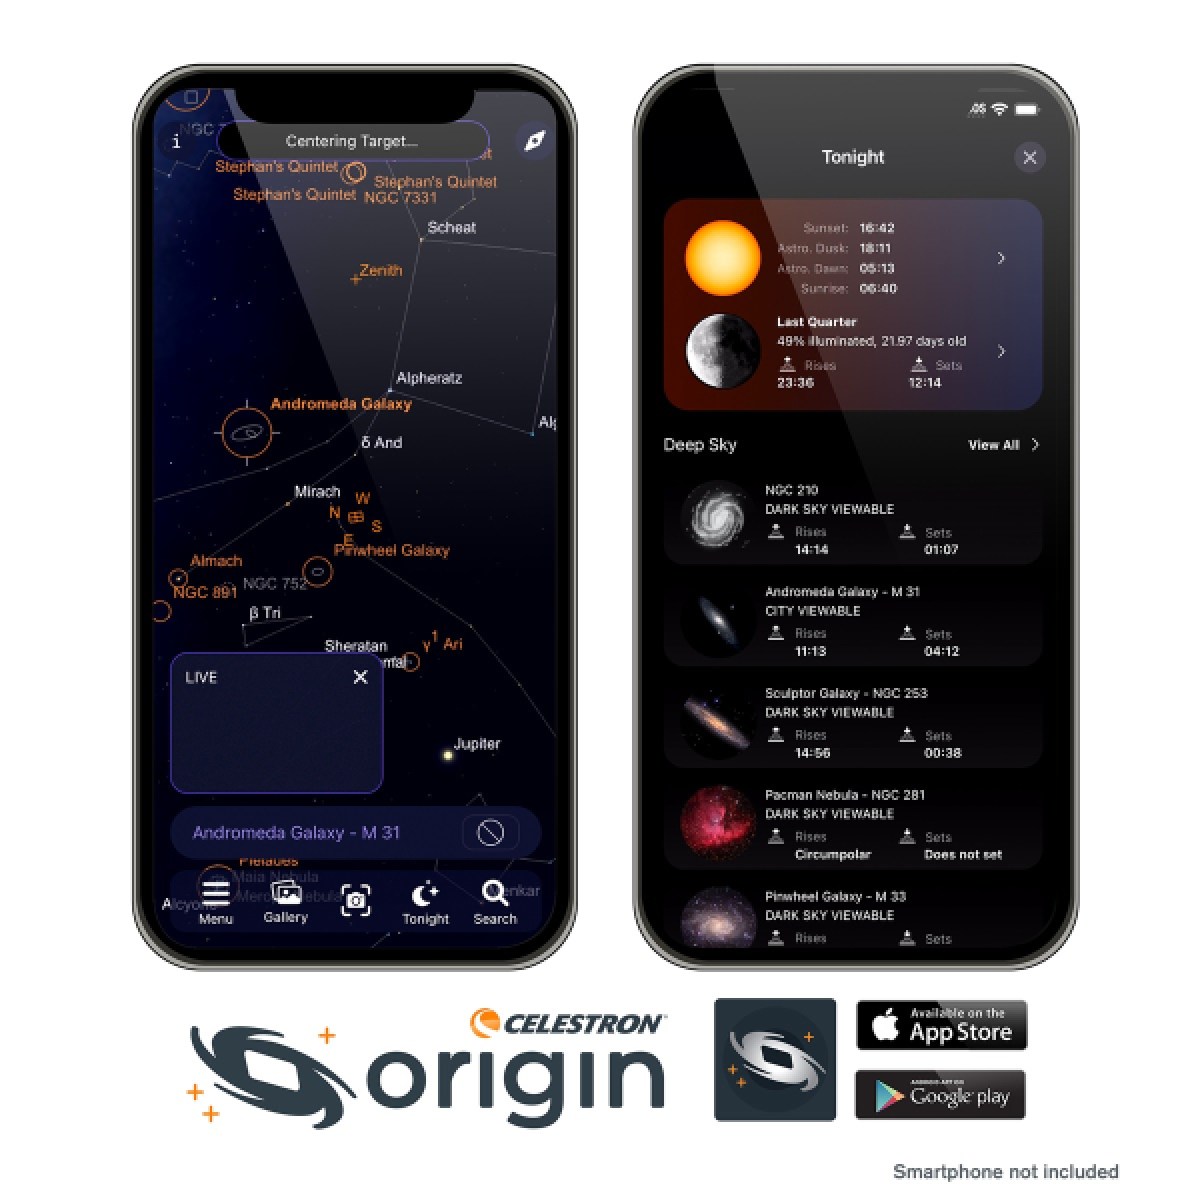 Celestron Origin's mobile app.